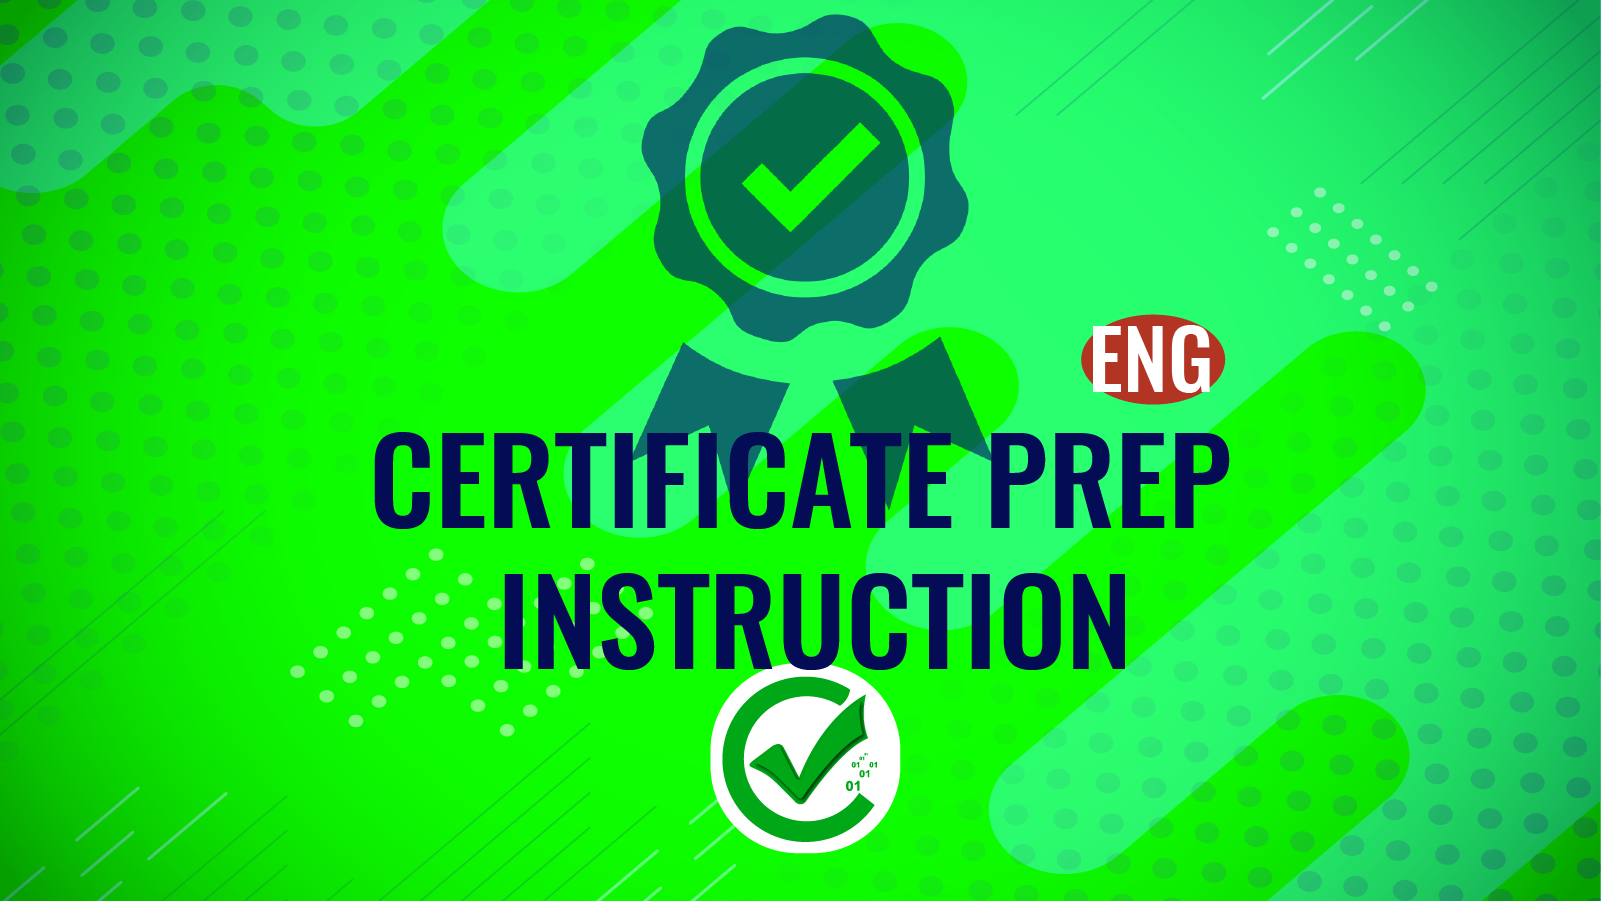  Certificate Prep Instruction  126 127